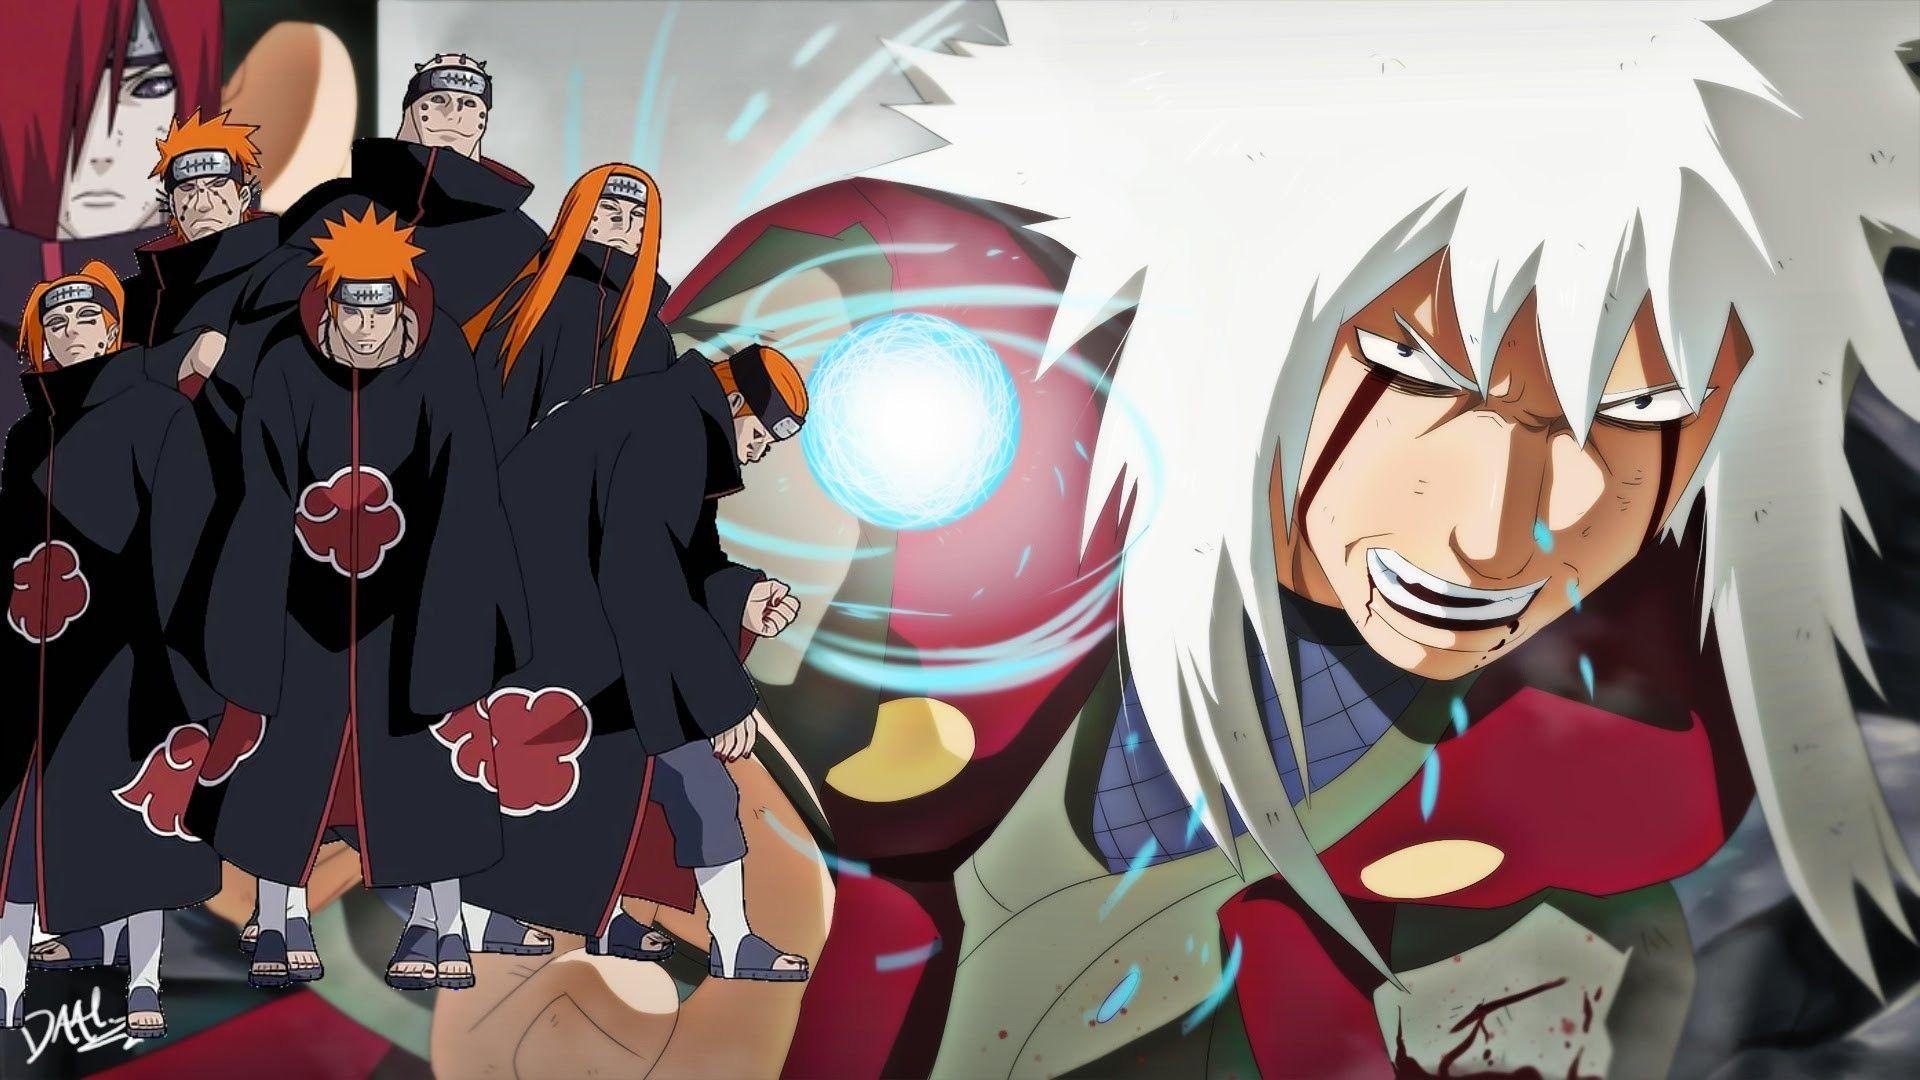 Naruto vs Pain Wallpaper